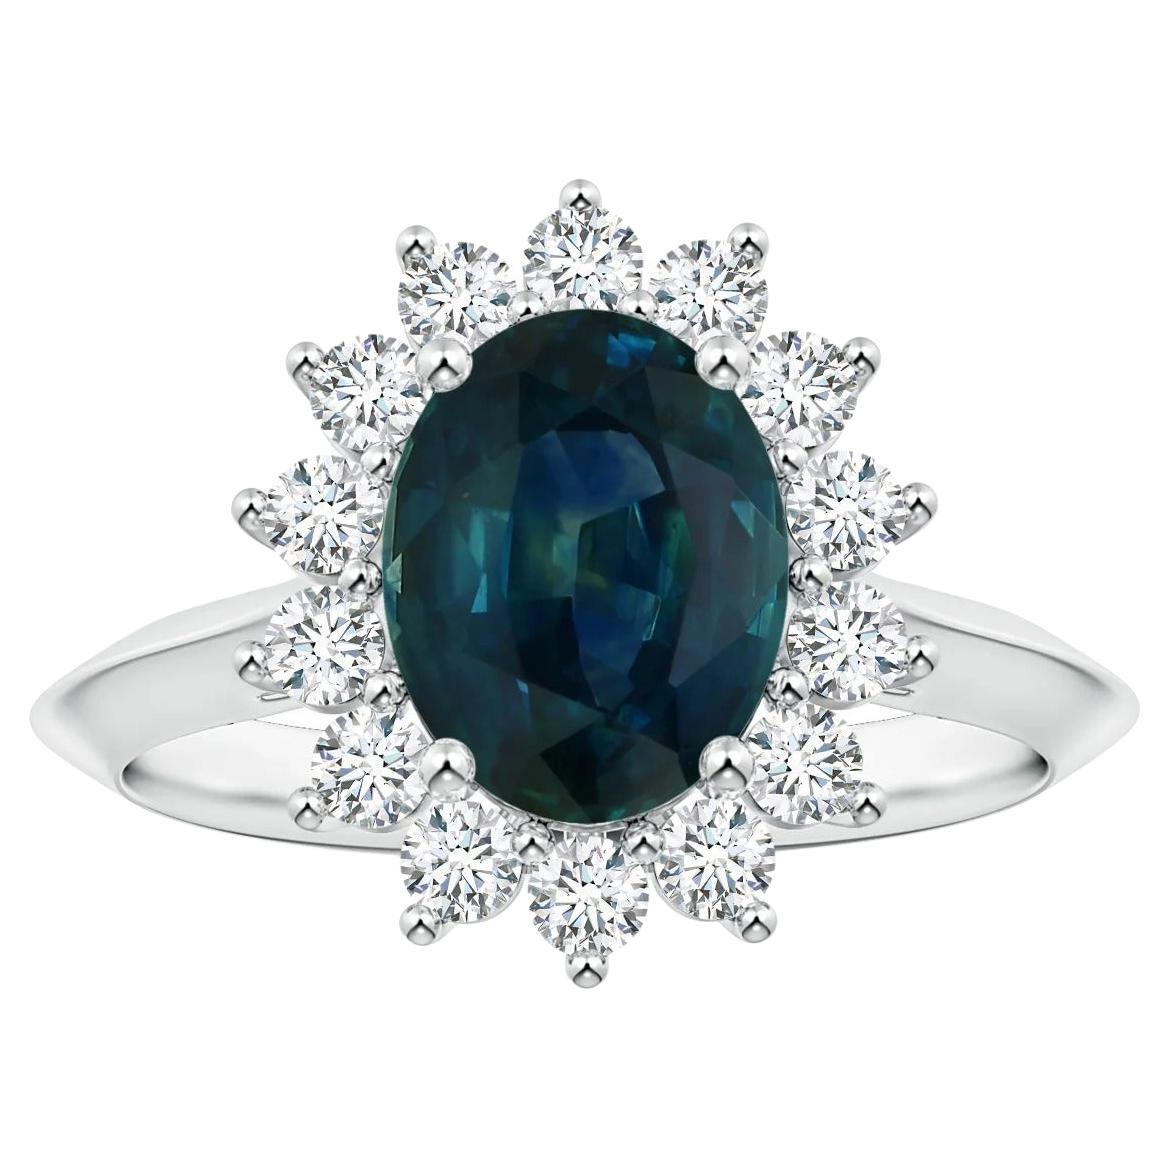 ANGARA GIA Certified Princess Diana Inspired Teal Sapphire Halo Ring in Platinum